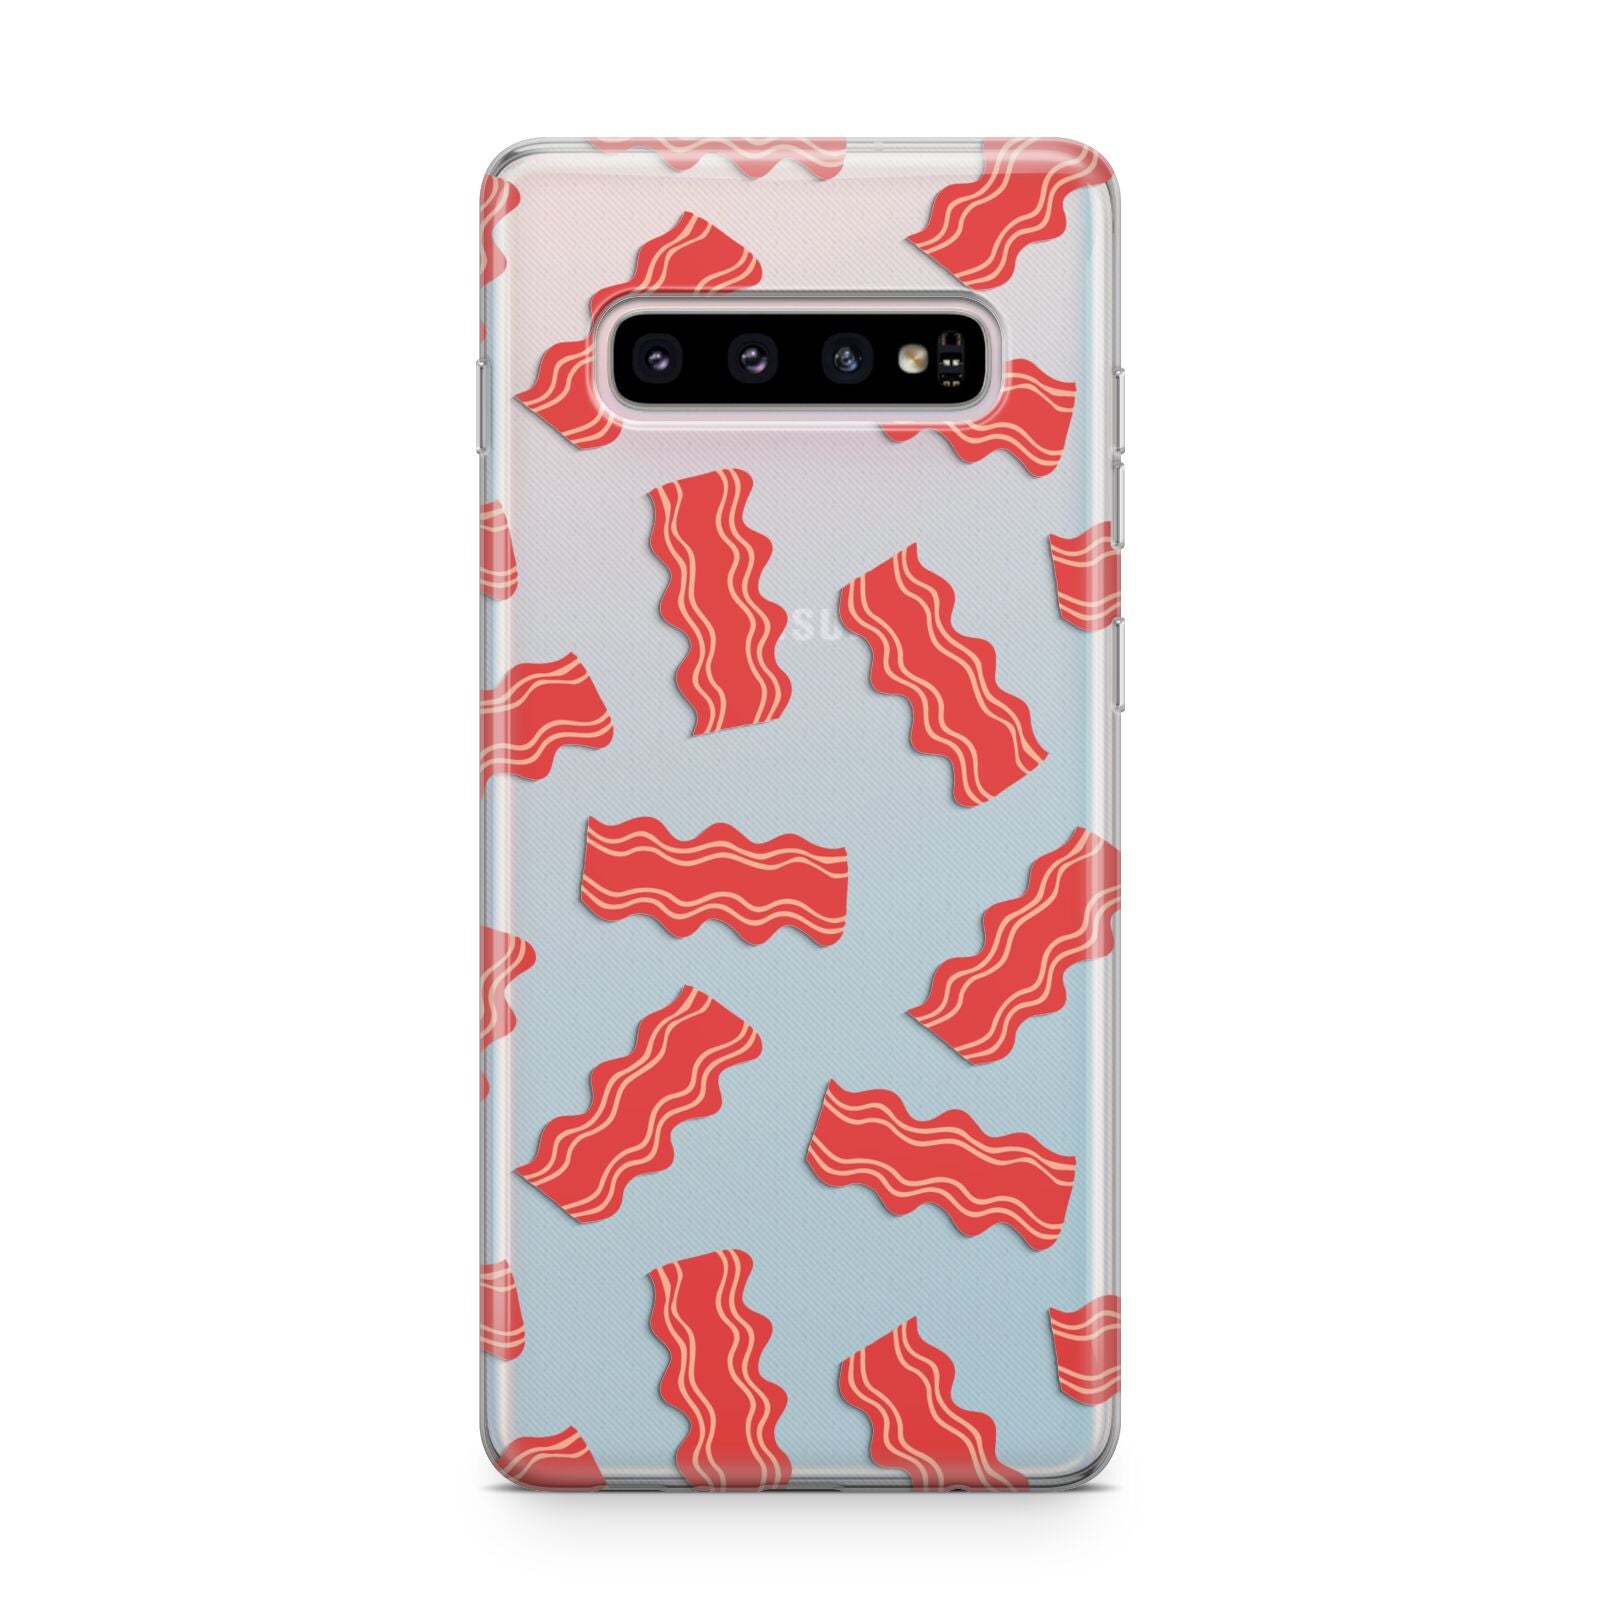 Bacon Samsung Galaxy S10 Plus Case